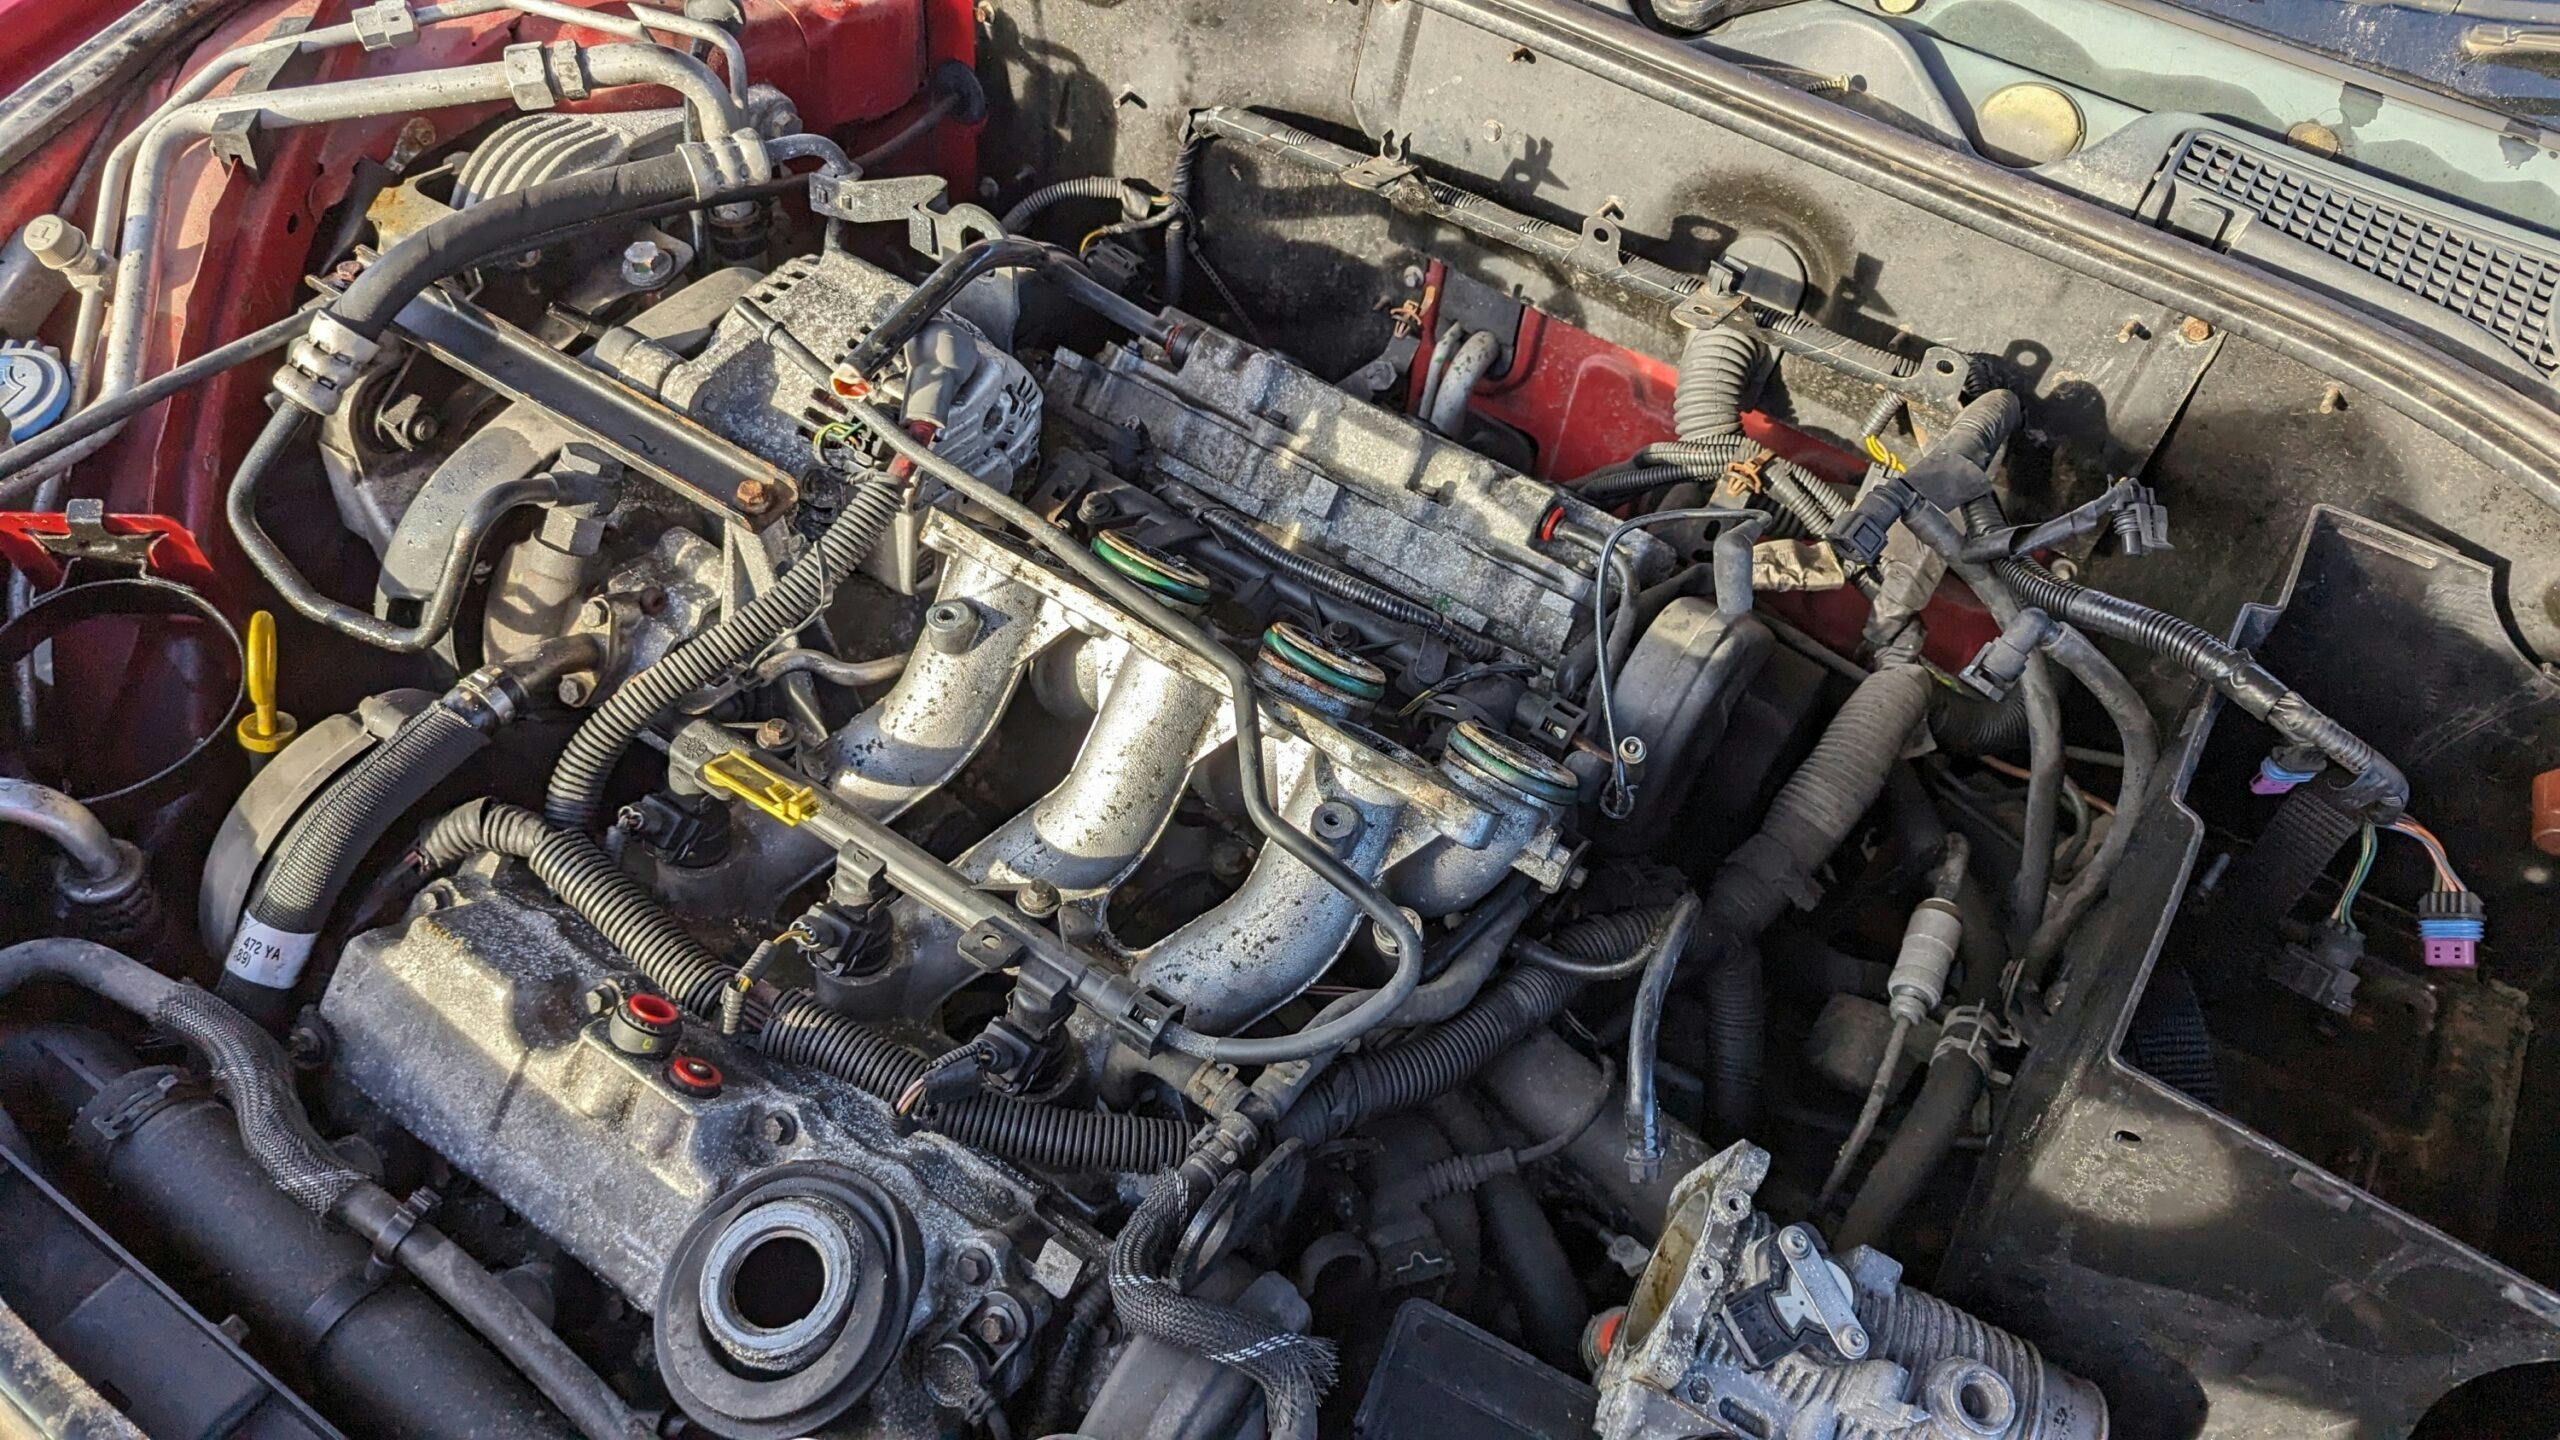 2005 MG ZT 190 engine